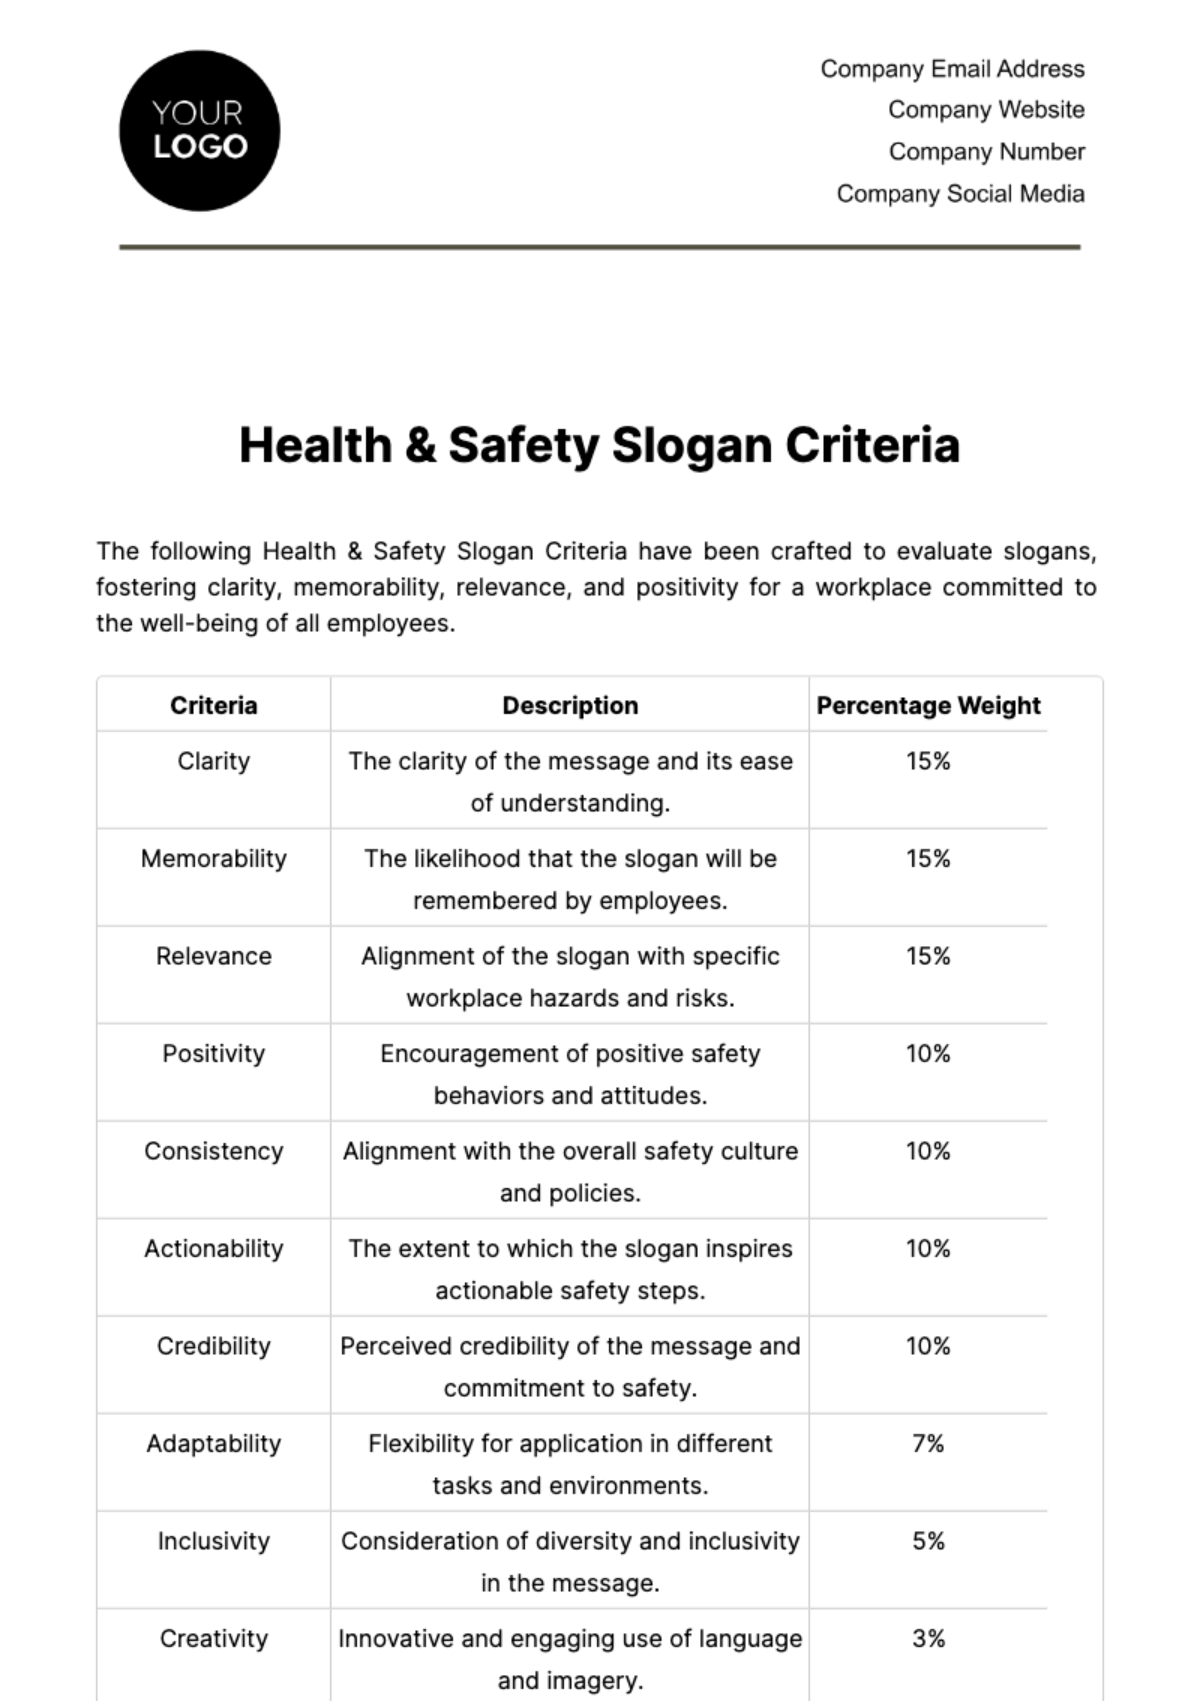 Health & Safety Slogan Criteria Template